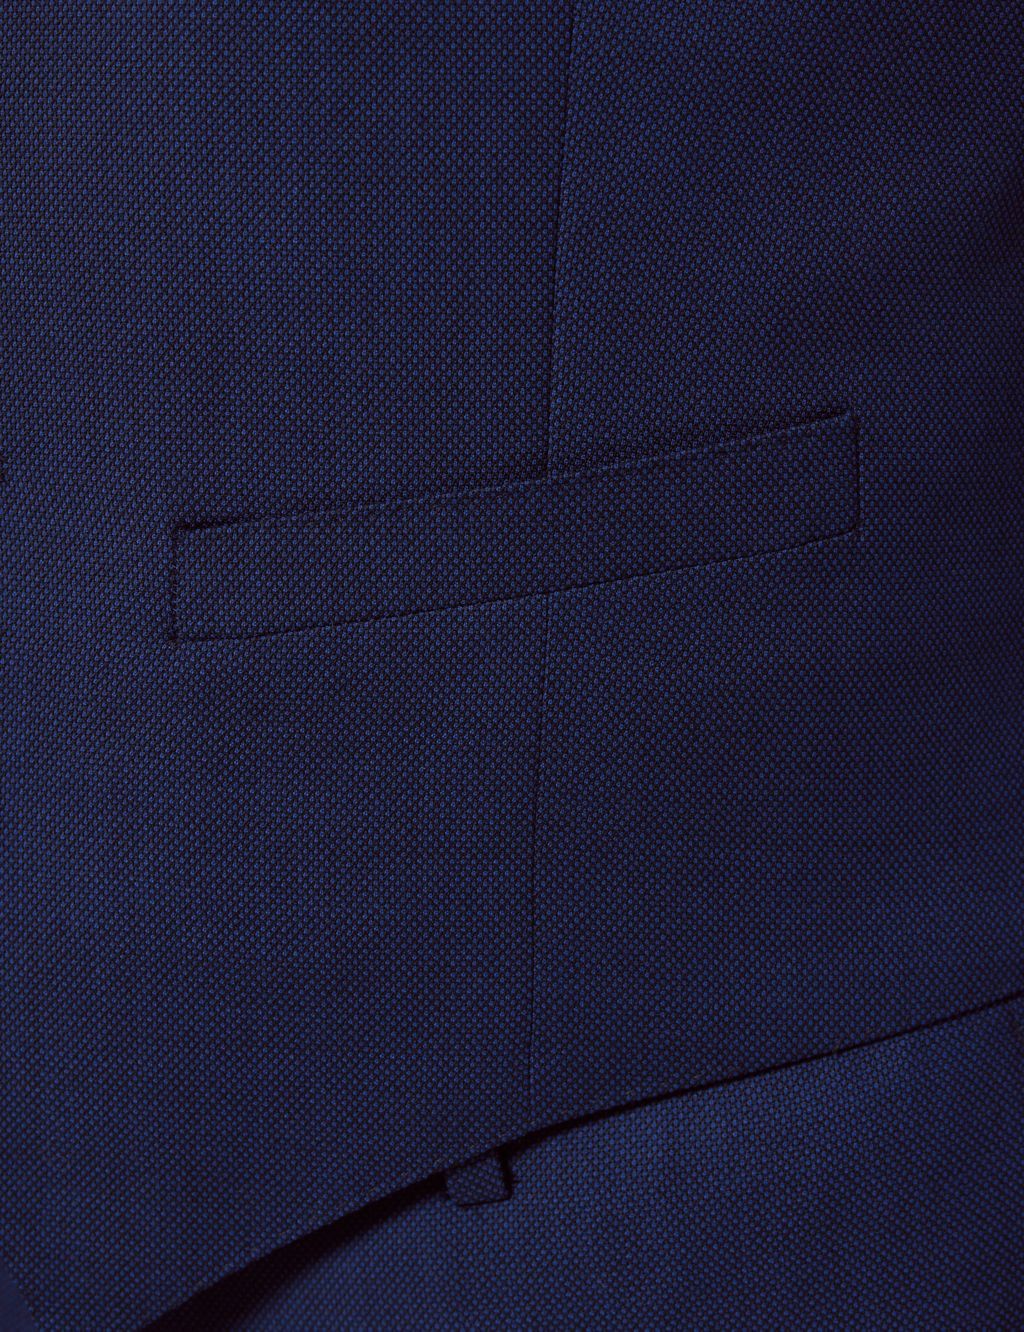 Slim Fit Super 120s Wool Textured Waistcoat image 5